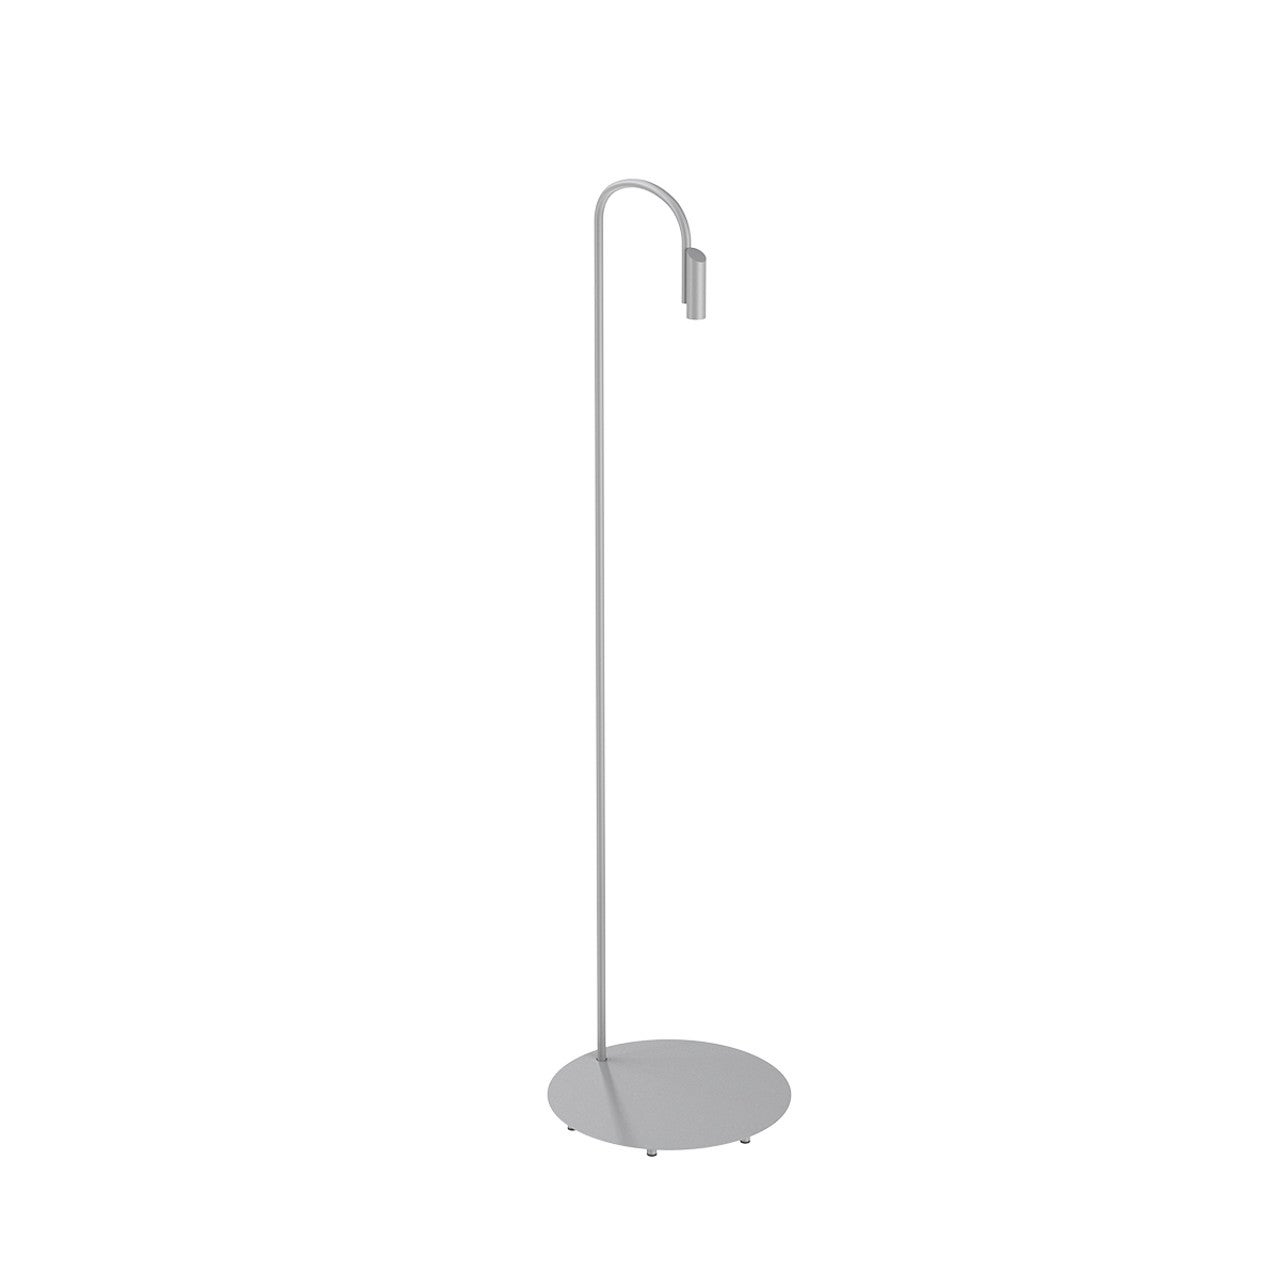 Flos Caule 3000K Model 4 Outdoor Floor Lamp in Grey with Regular Shade For Sale